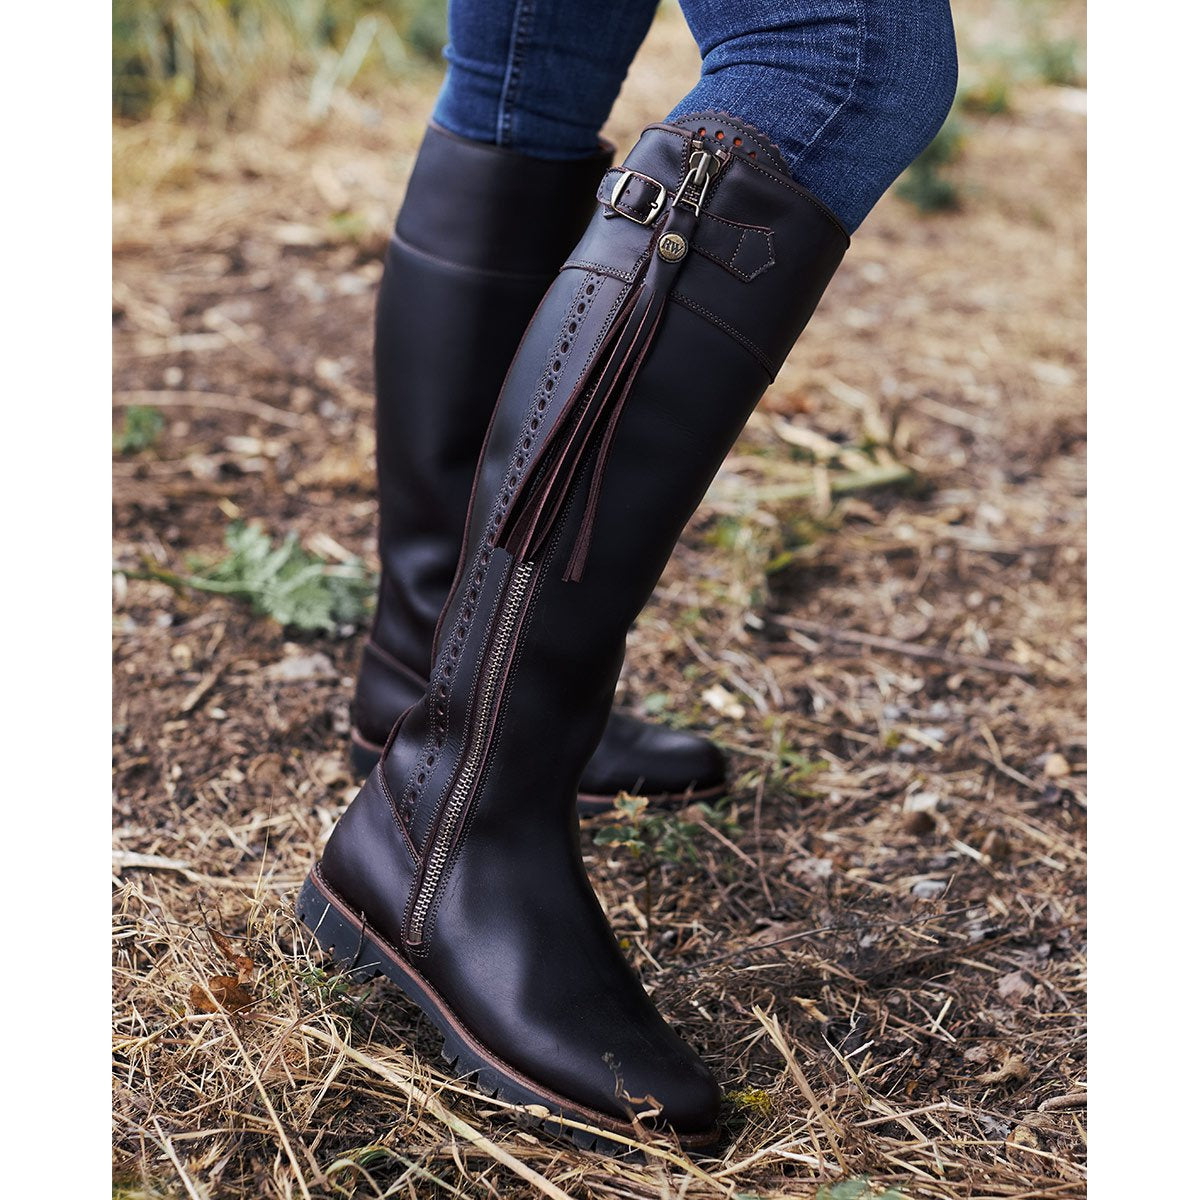 Women's Traditional Leather Spanish Boots-Women's Footwear-Kevin's Fine Outdoor Gear & Apparel